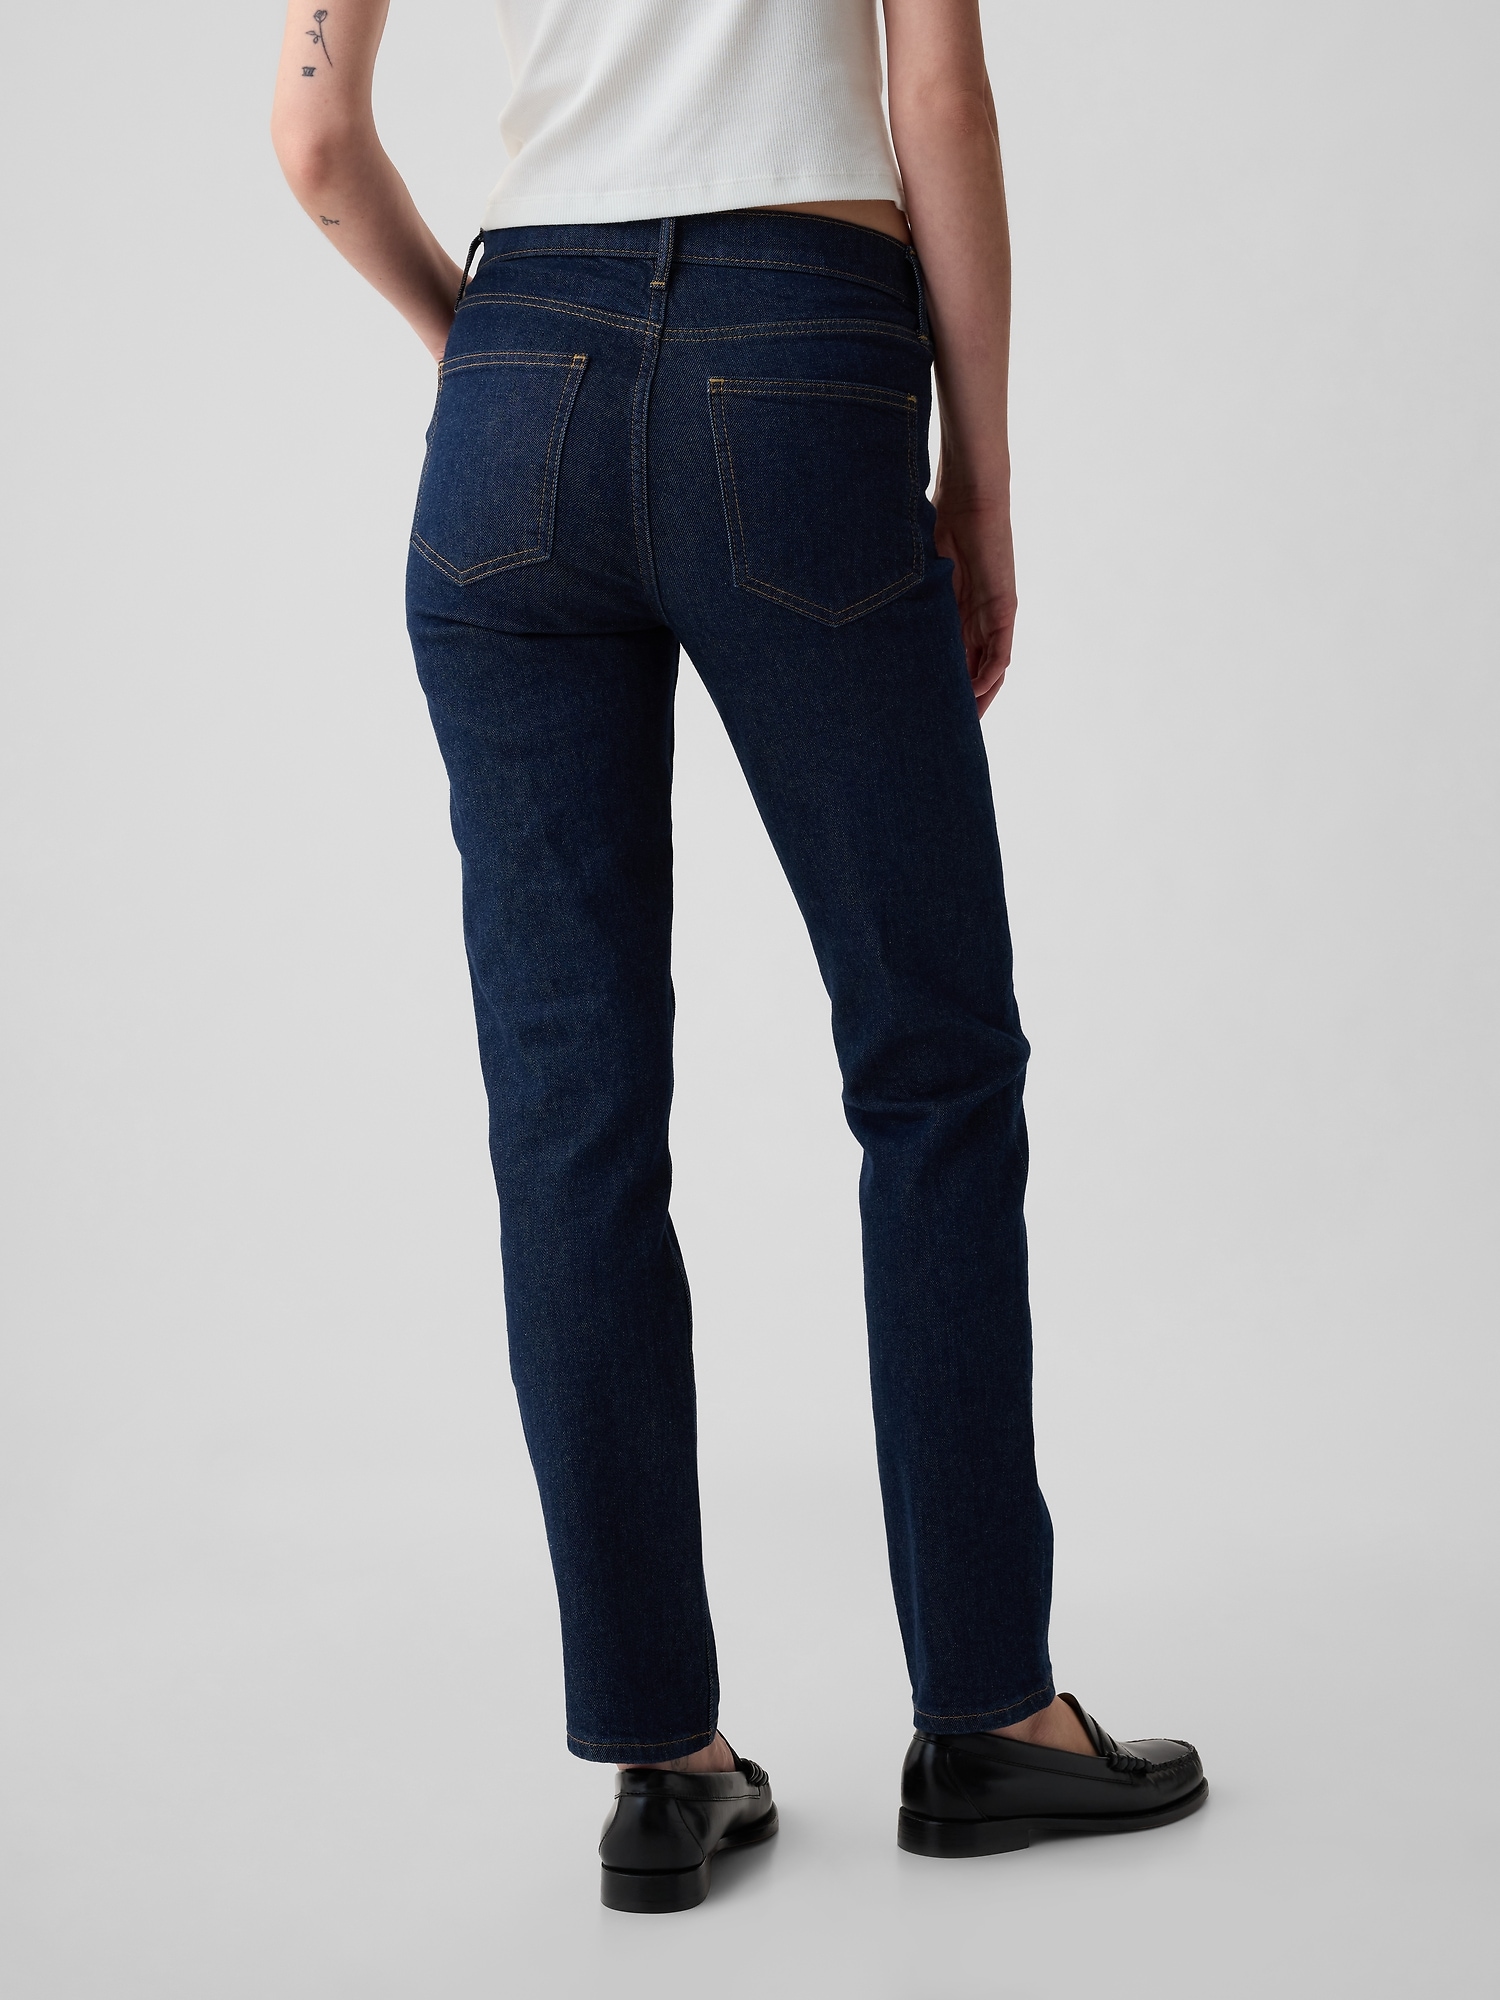 Women's Jeans, Side Zipper Detail, Indigo Blue